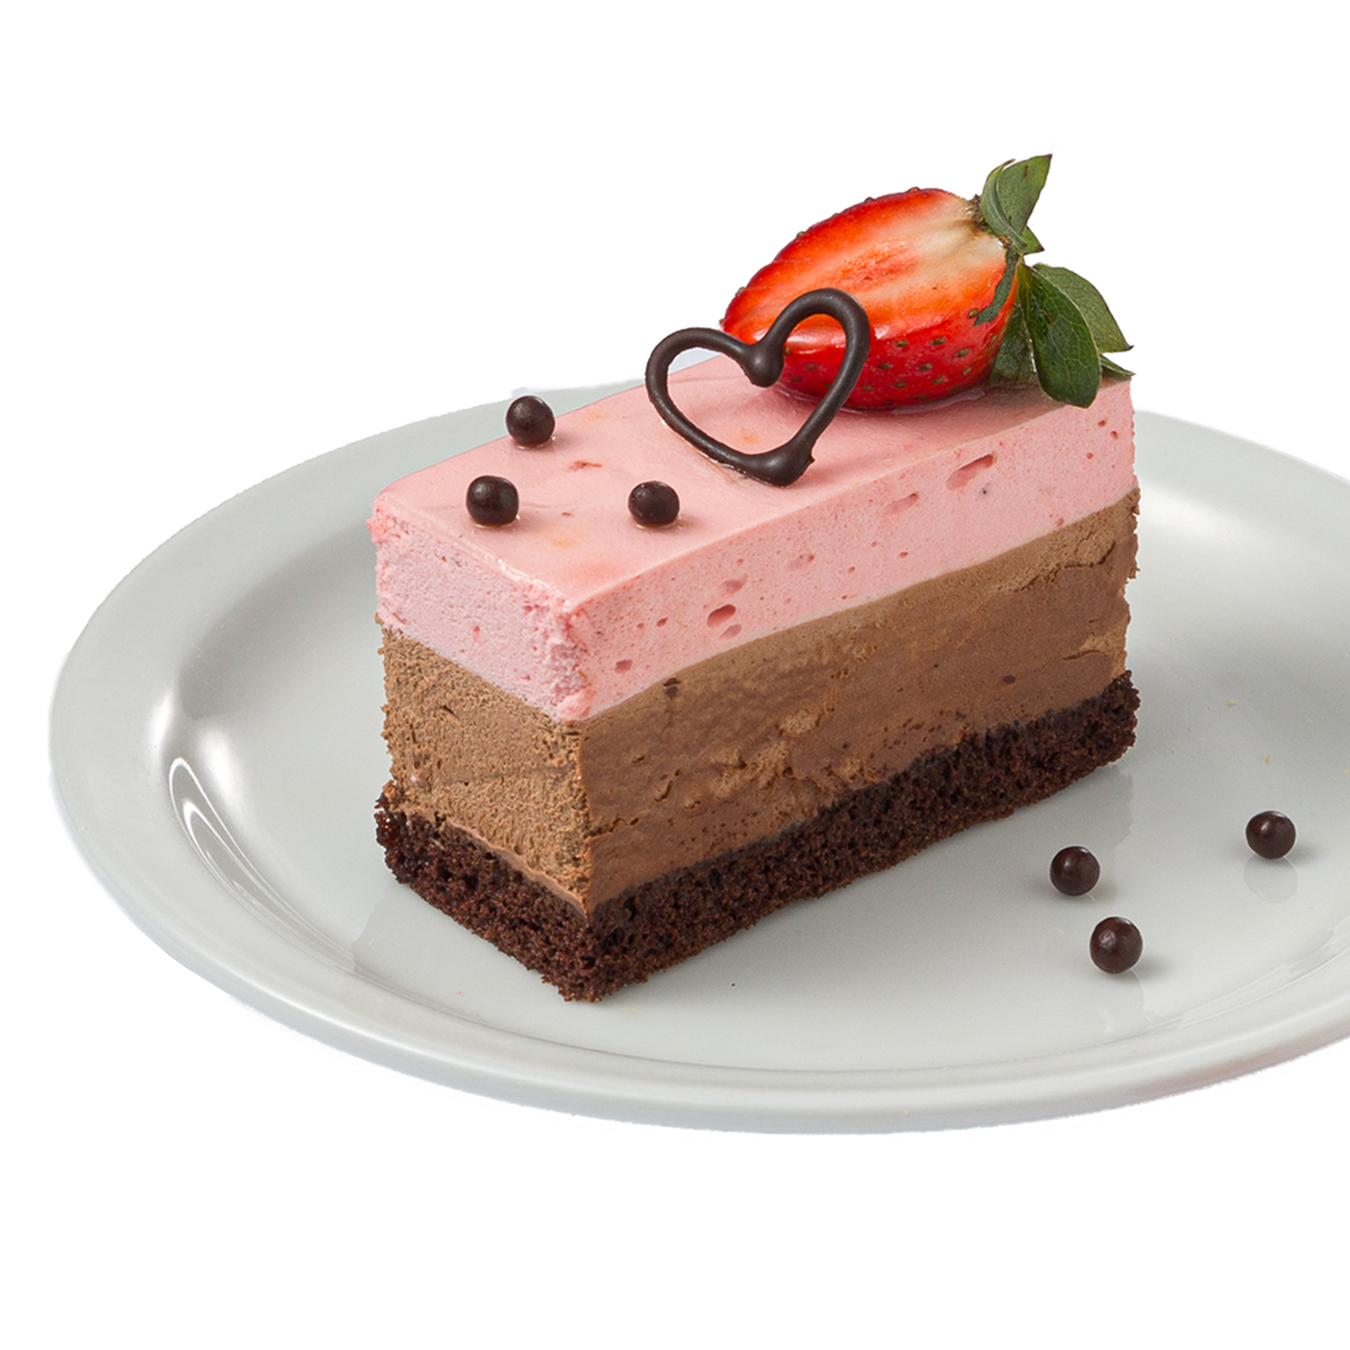 Strawberry-chocolate cake 1psc 150g